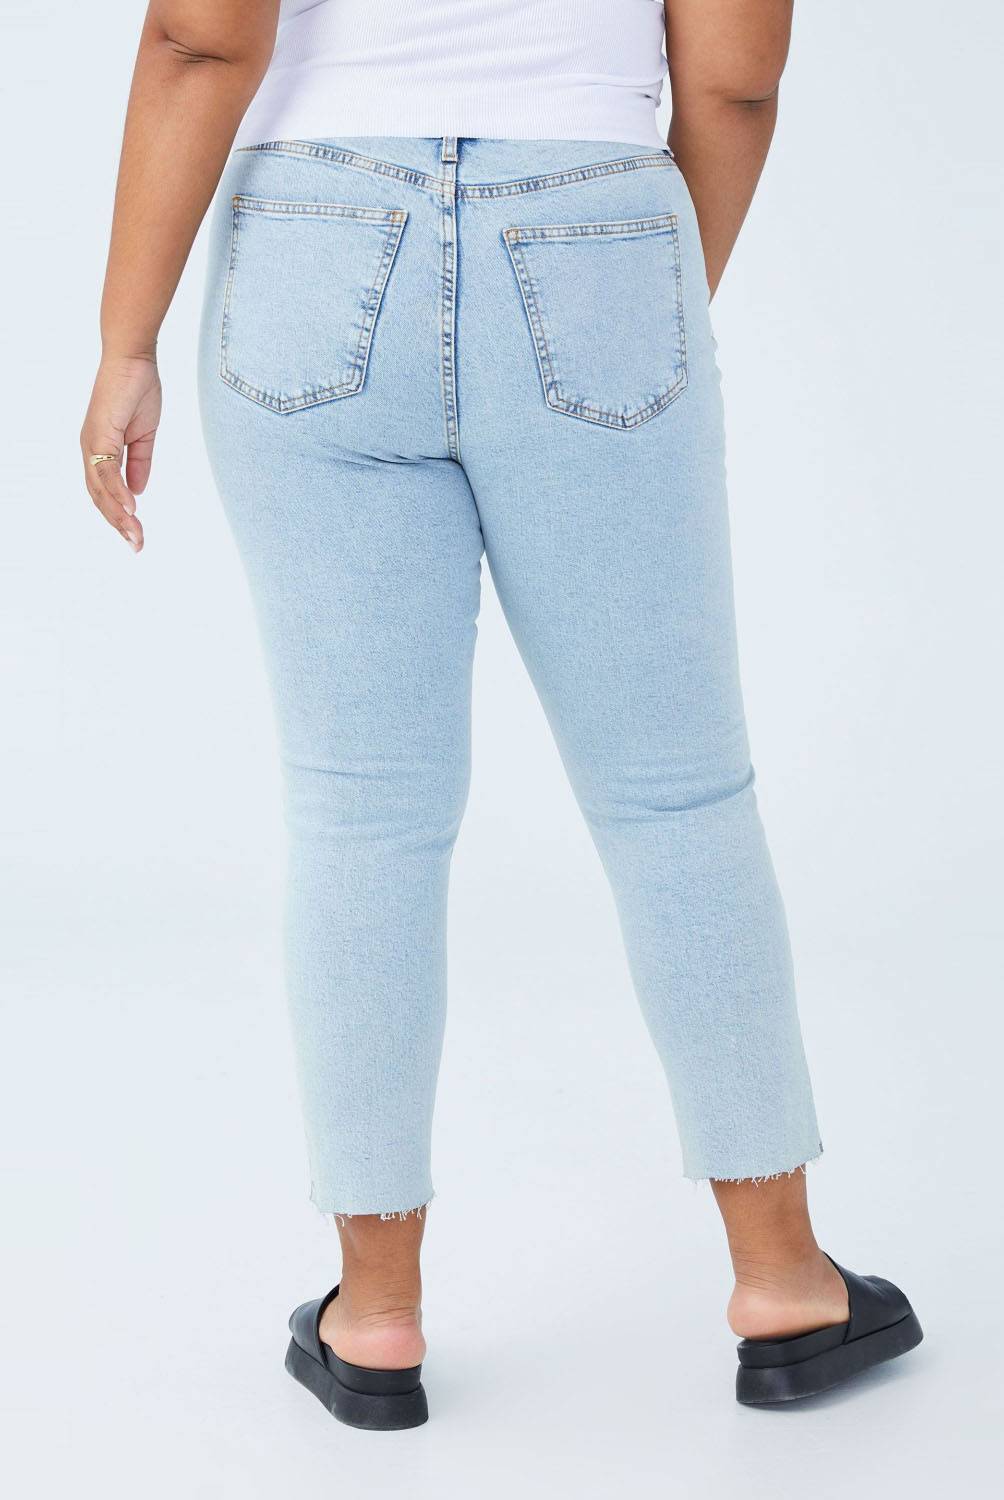 COTTON ON - Jeans Skinny Tiro Alto Mujer Cotton On